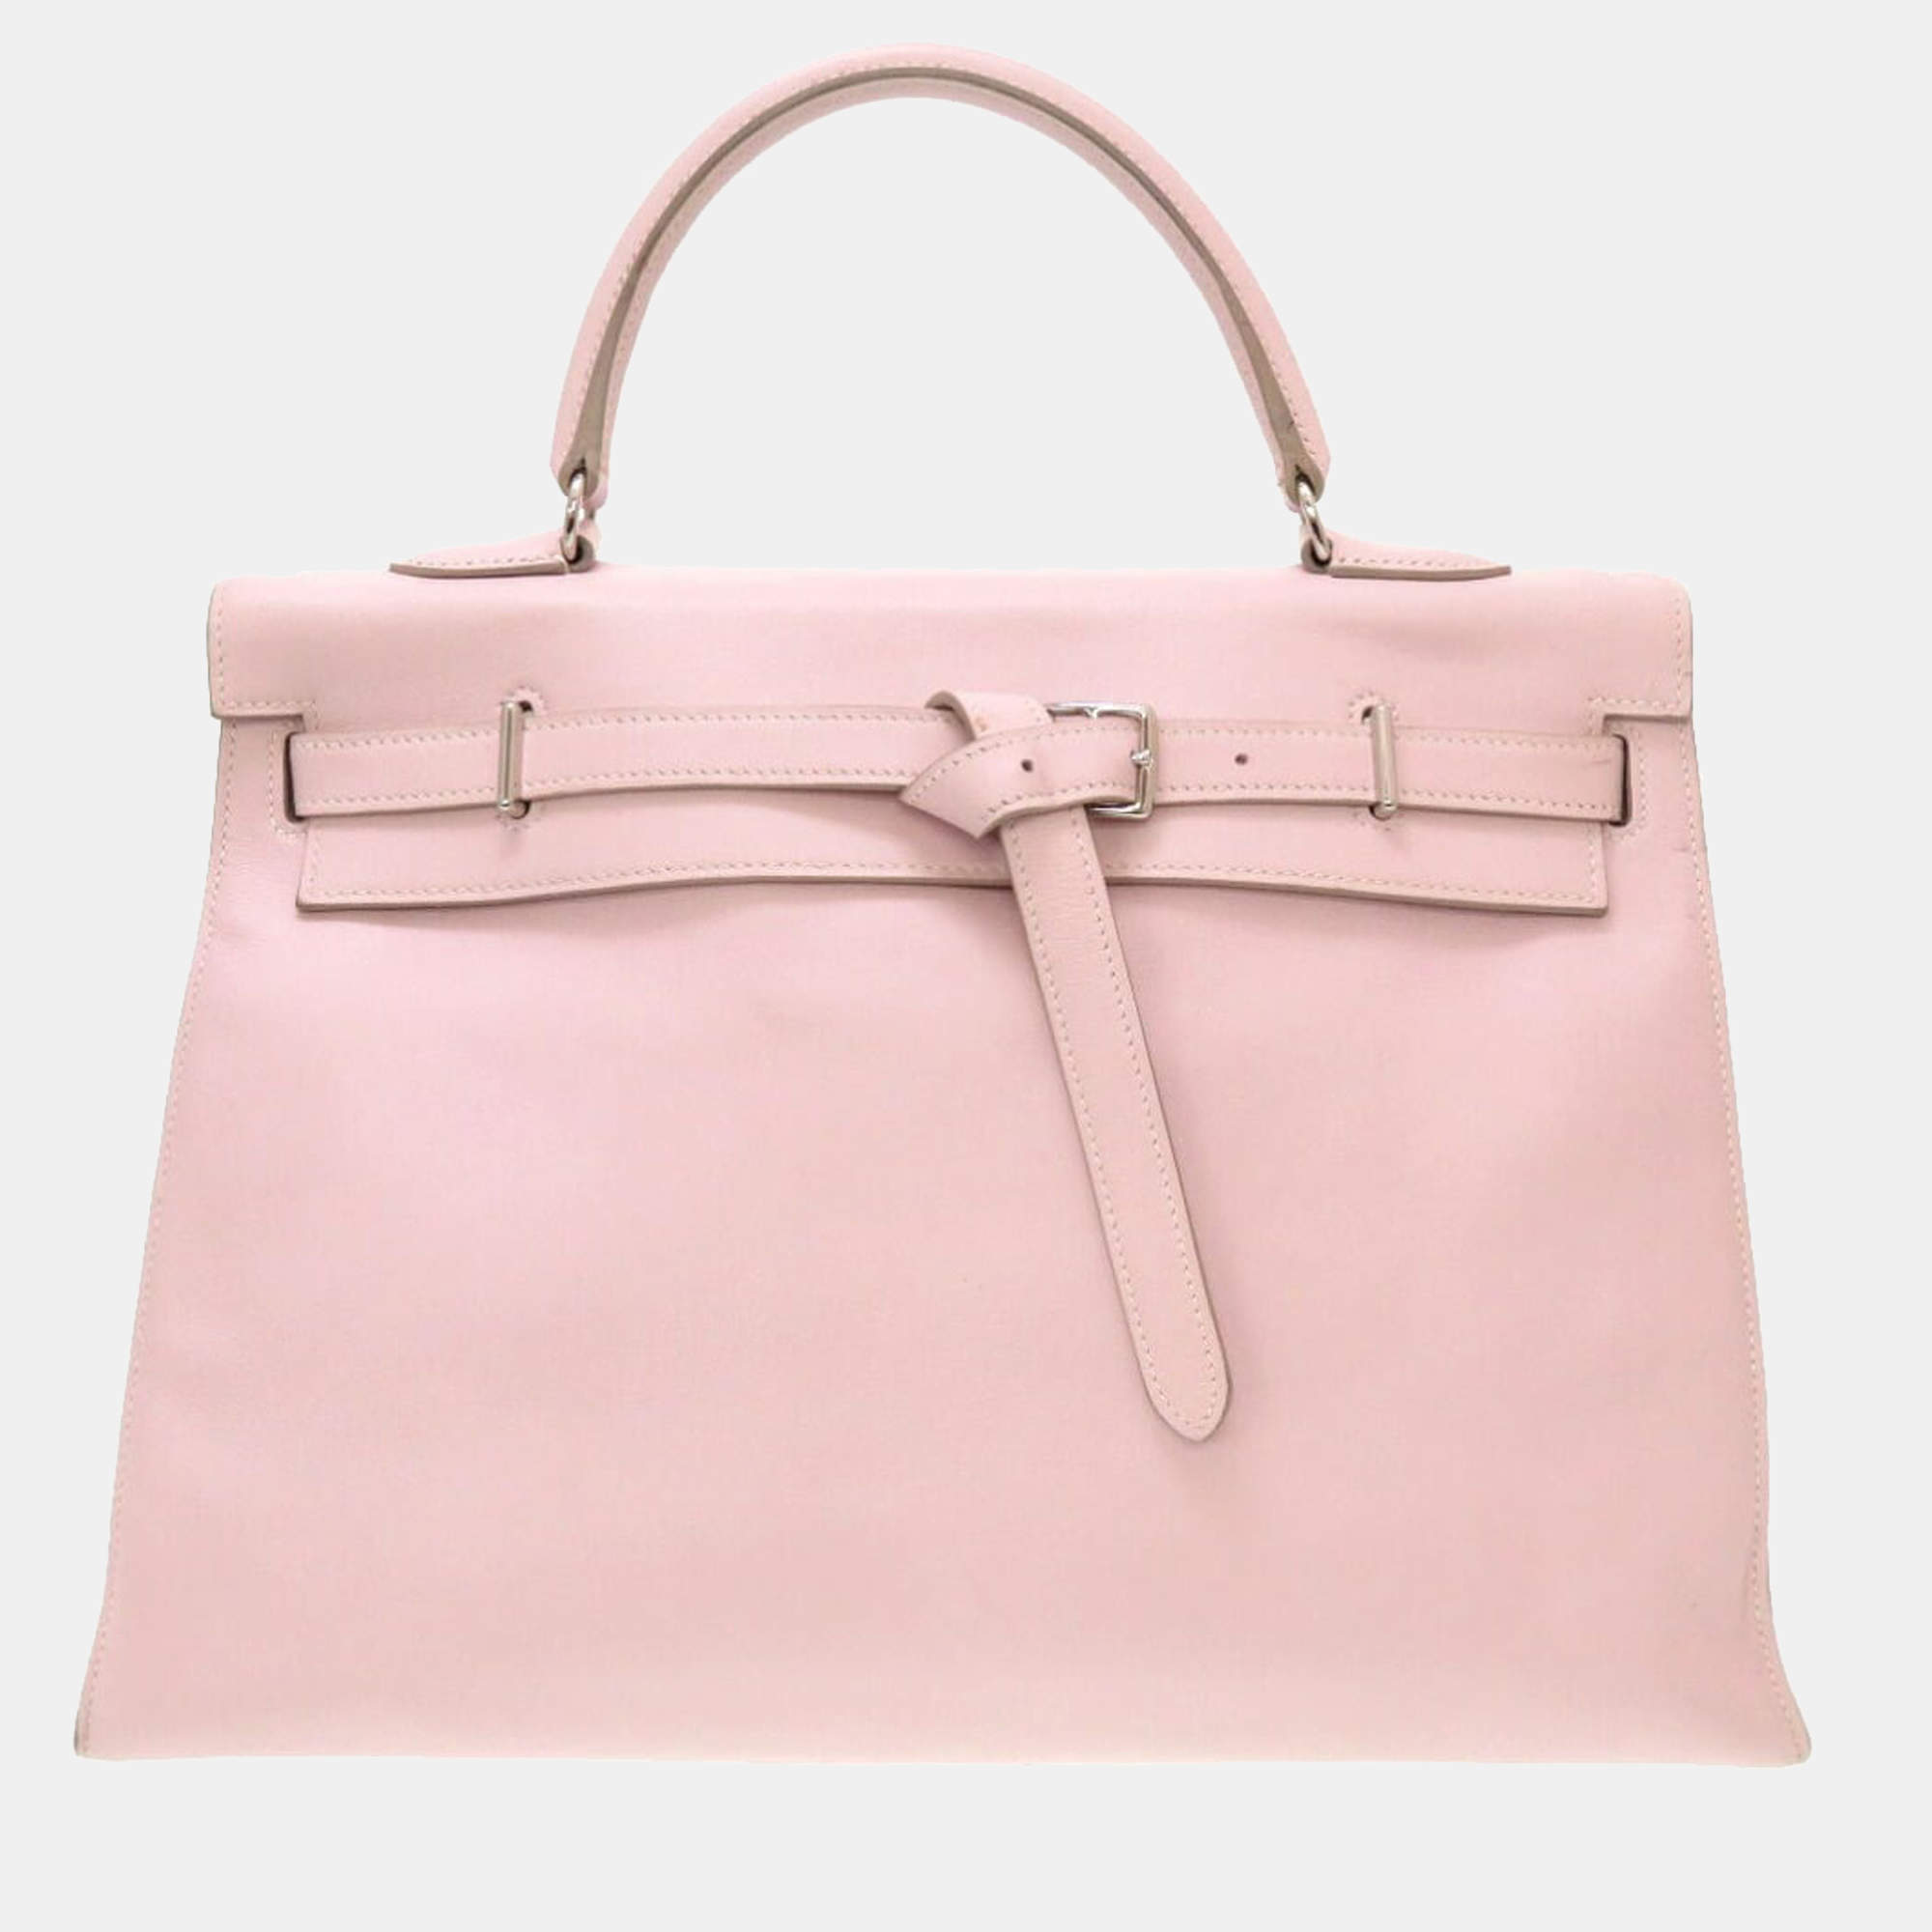 hermes pink bag price